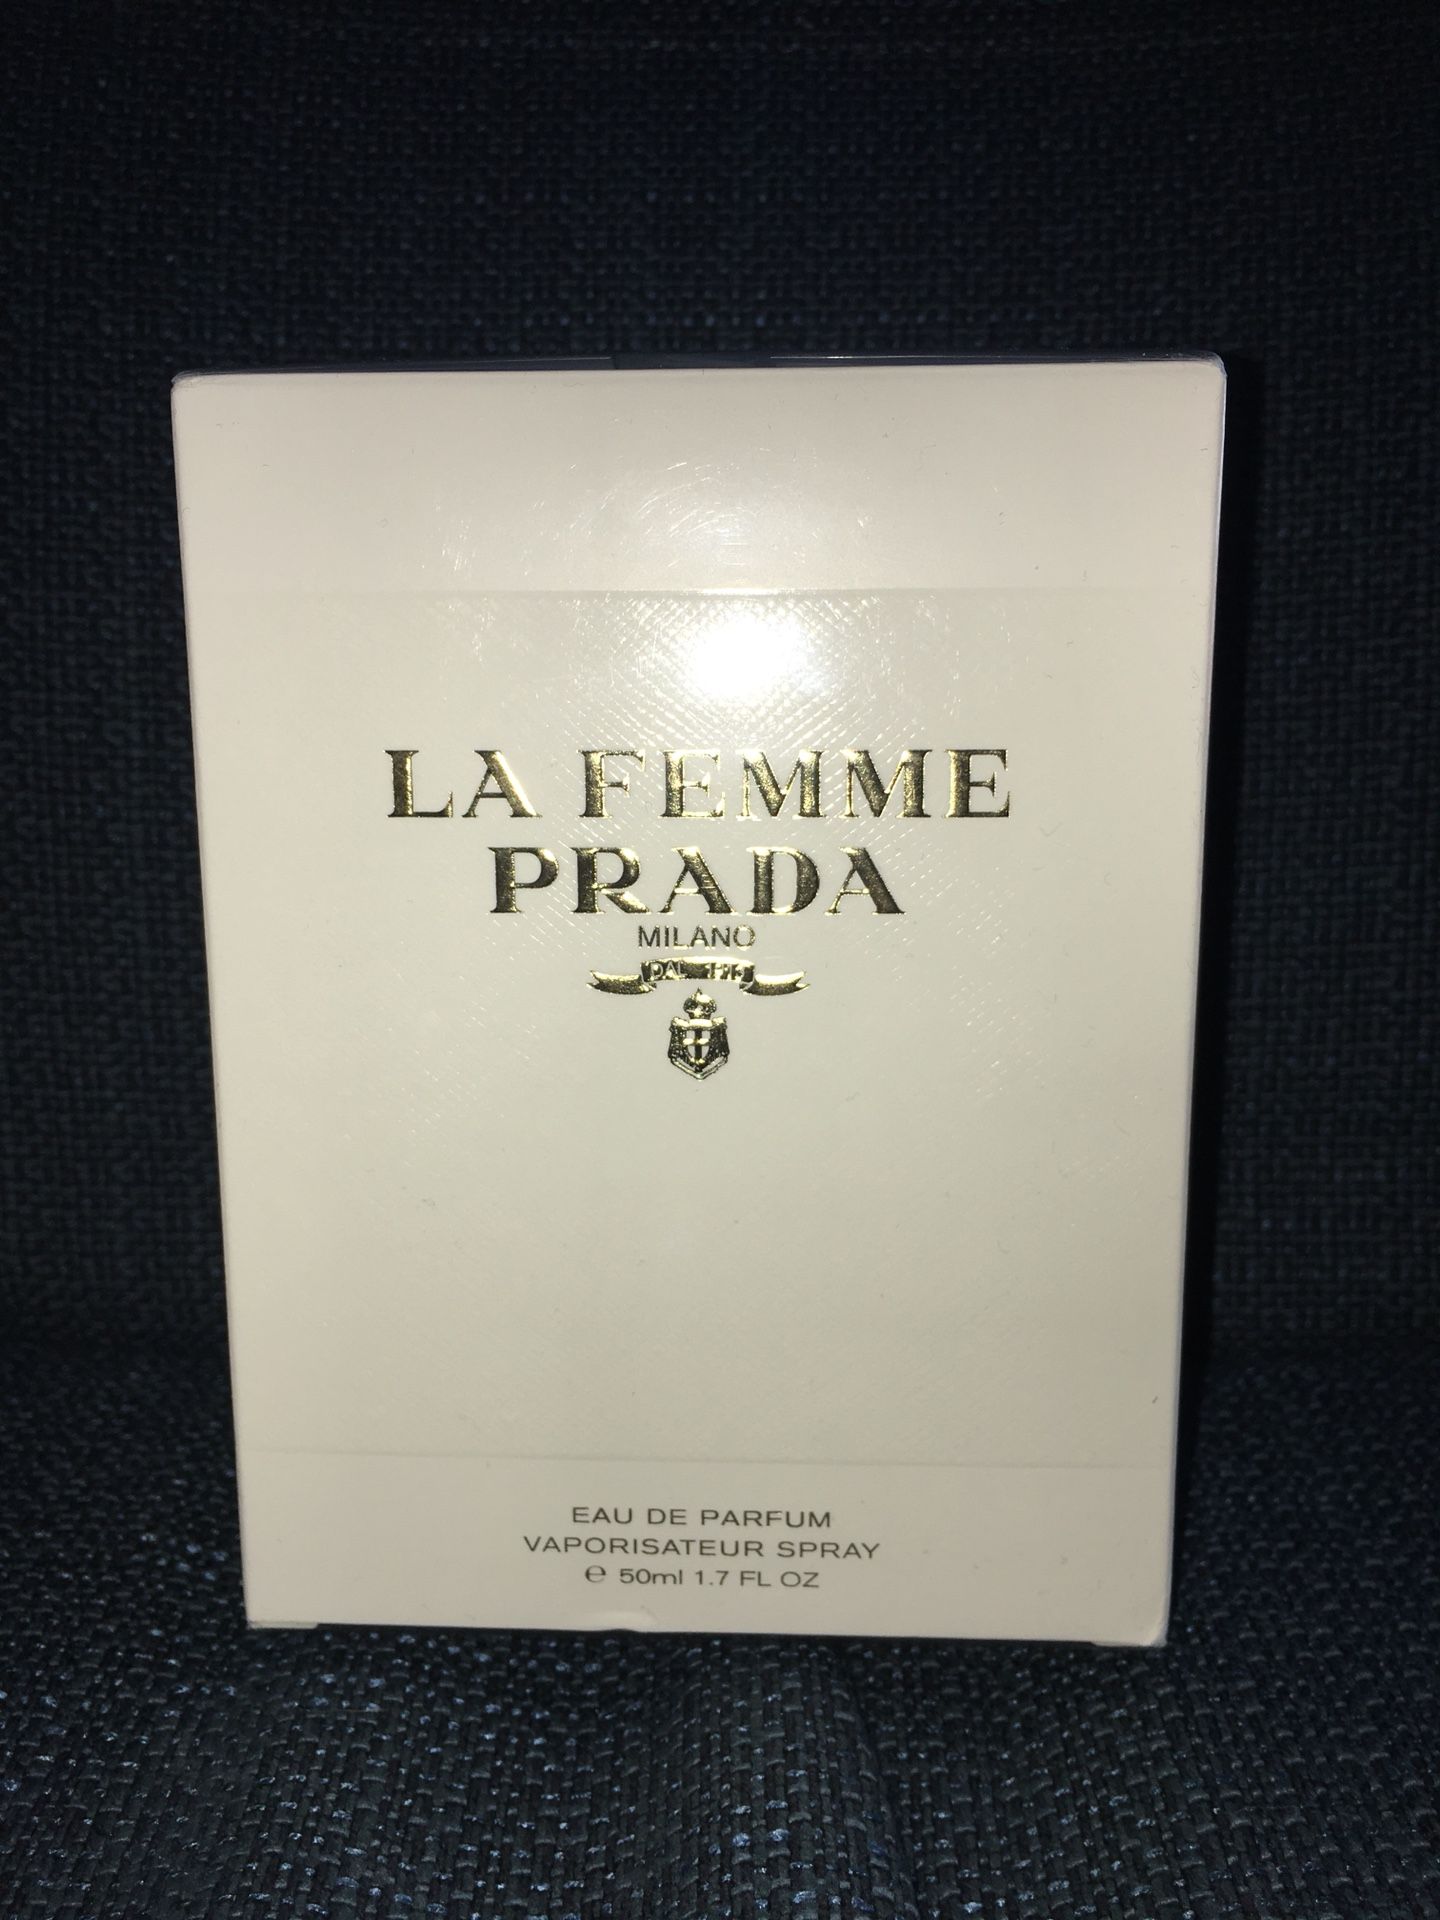 Prada Women’s Fragrance - La Femme Prada